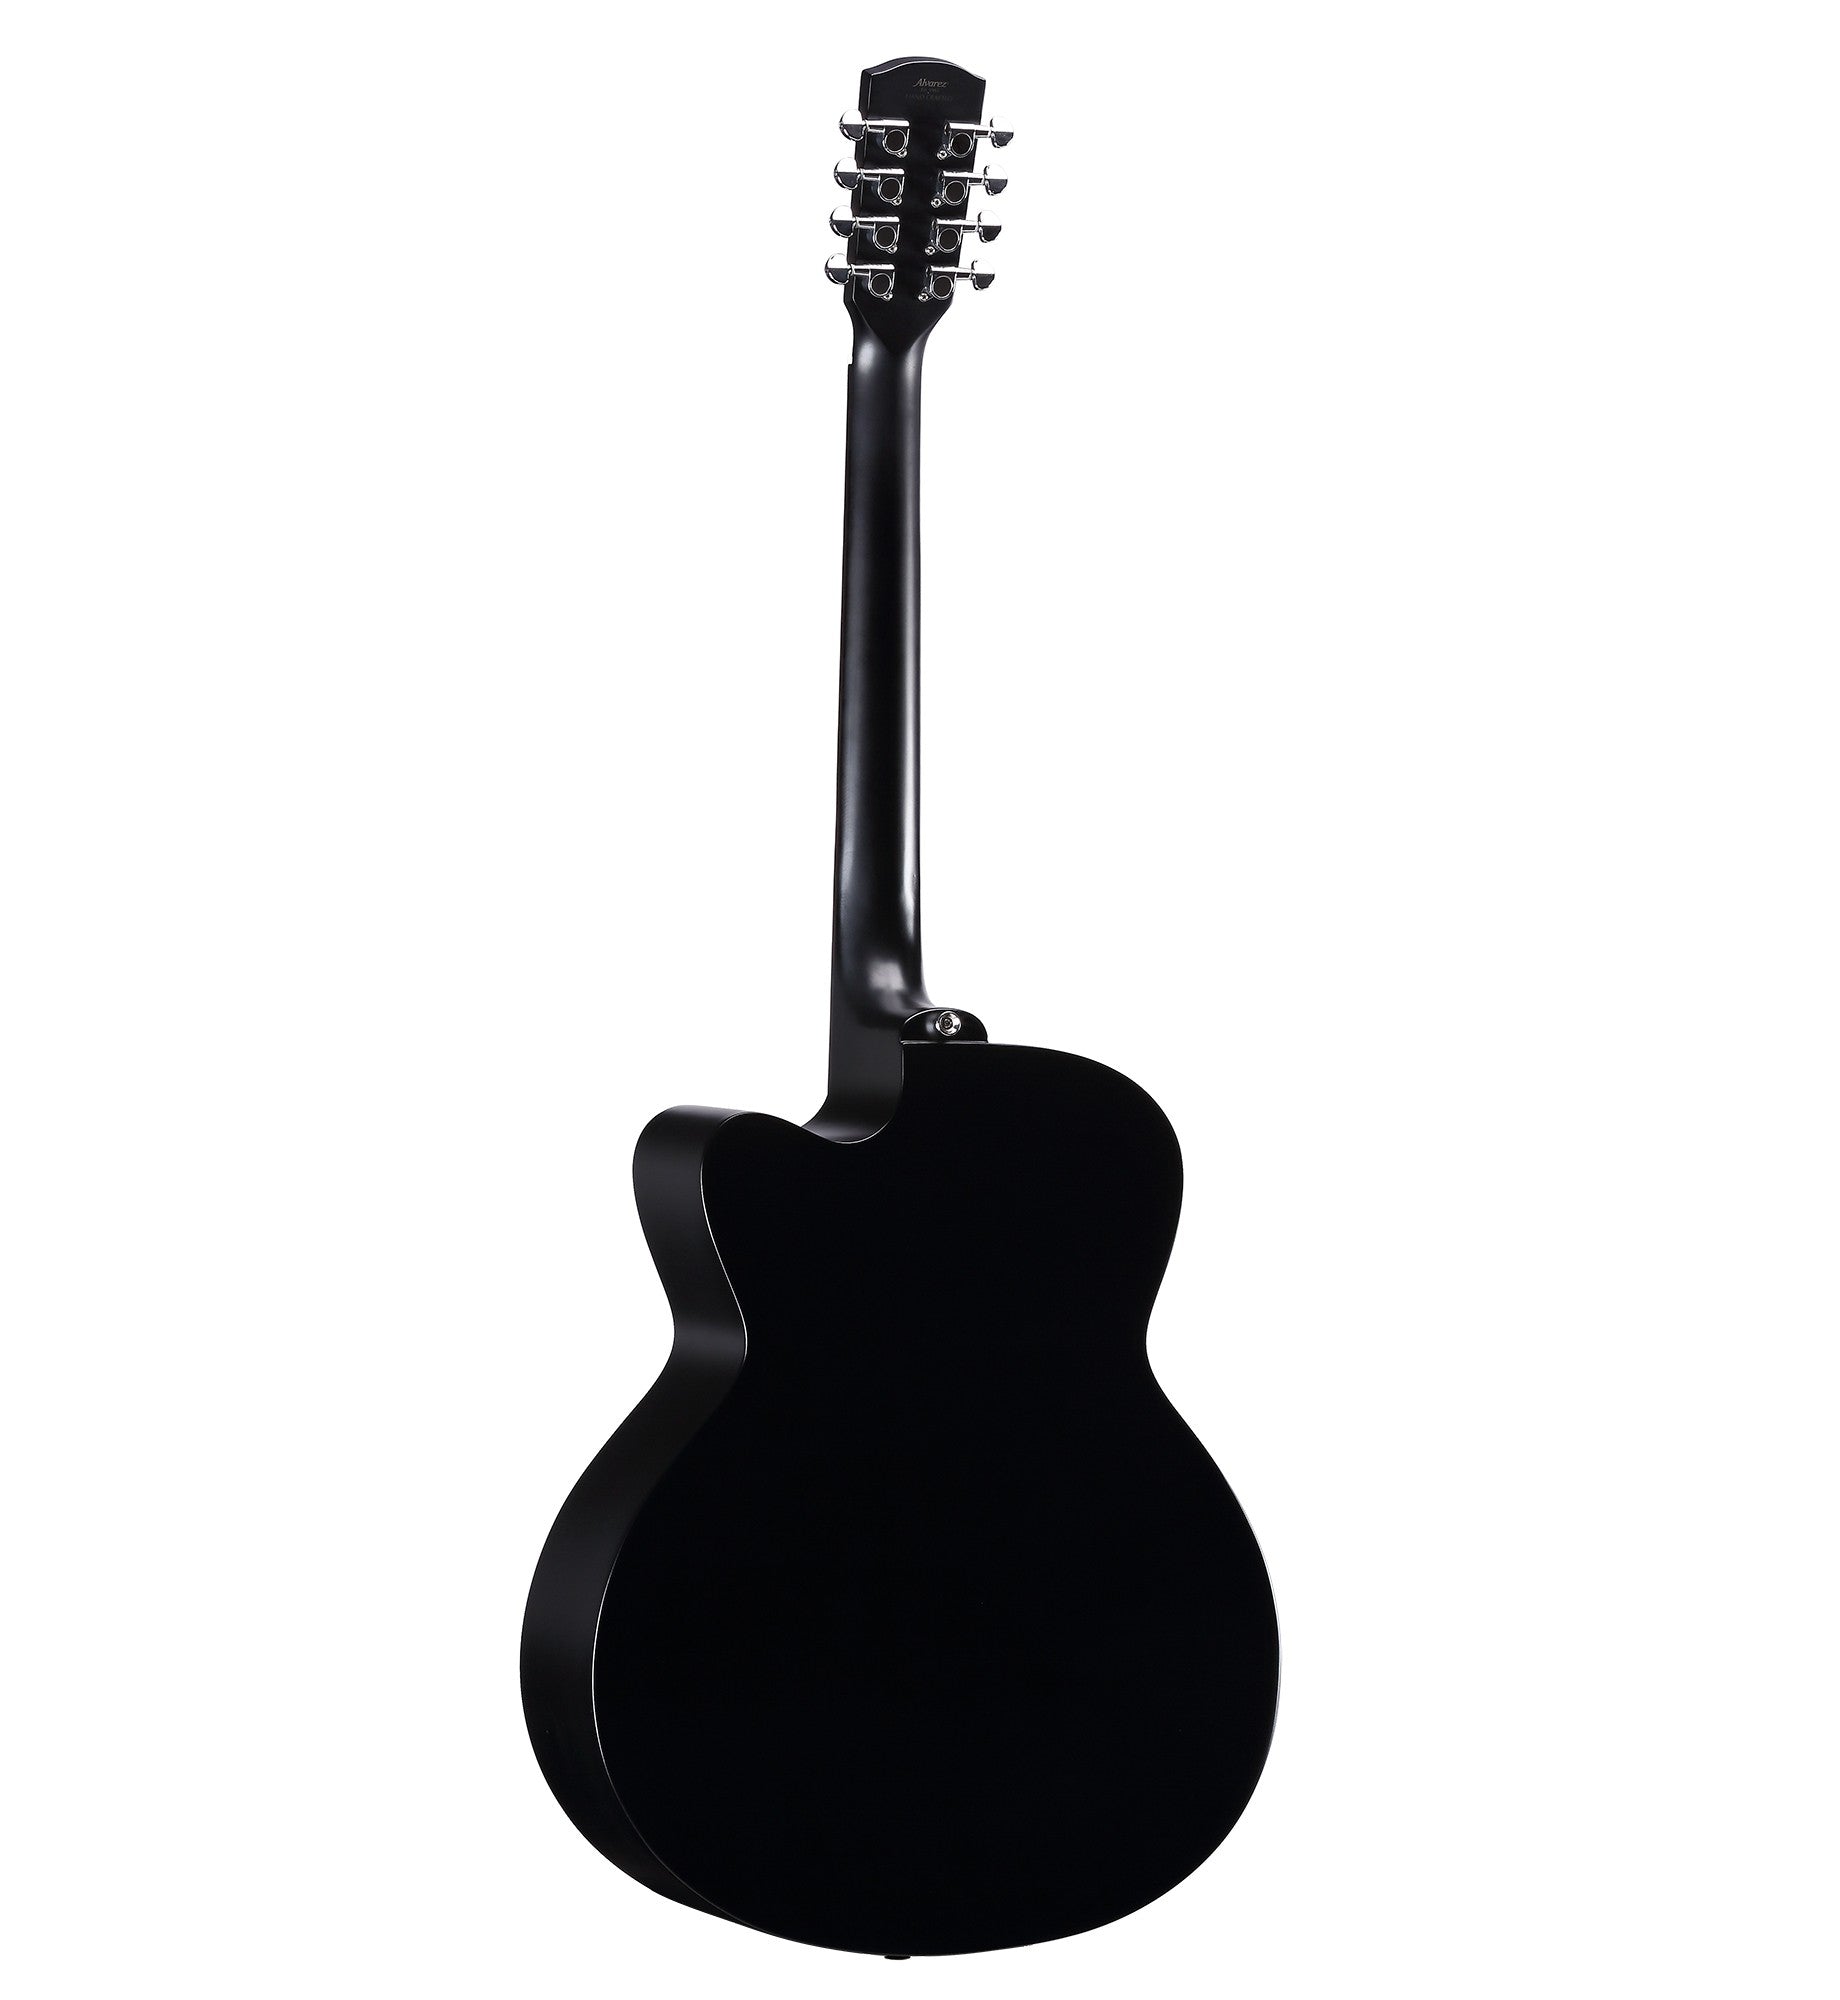 Alvarez - ABT60CE-8BK Artist 60 8-string Baritone Acoustic-electric Guitar - Black